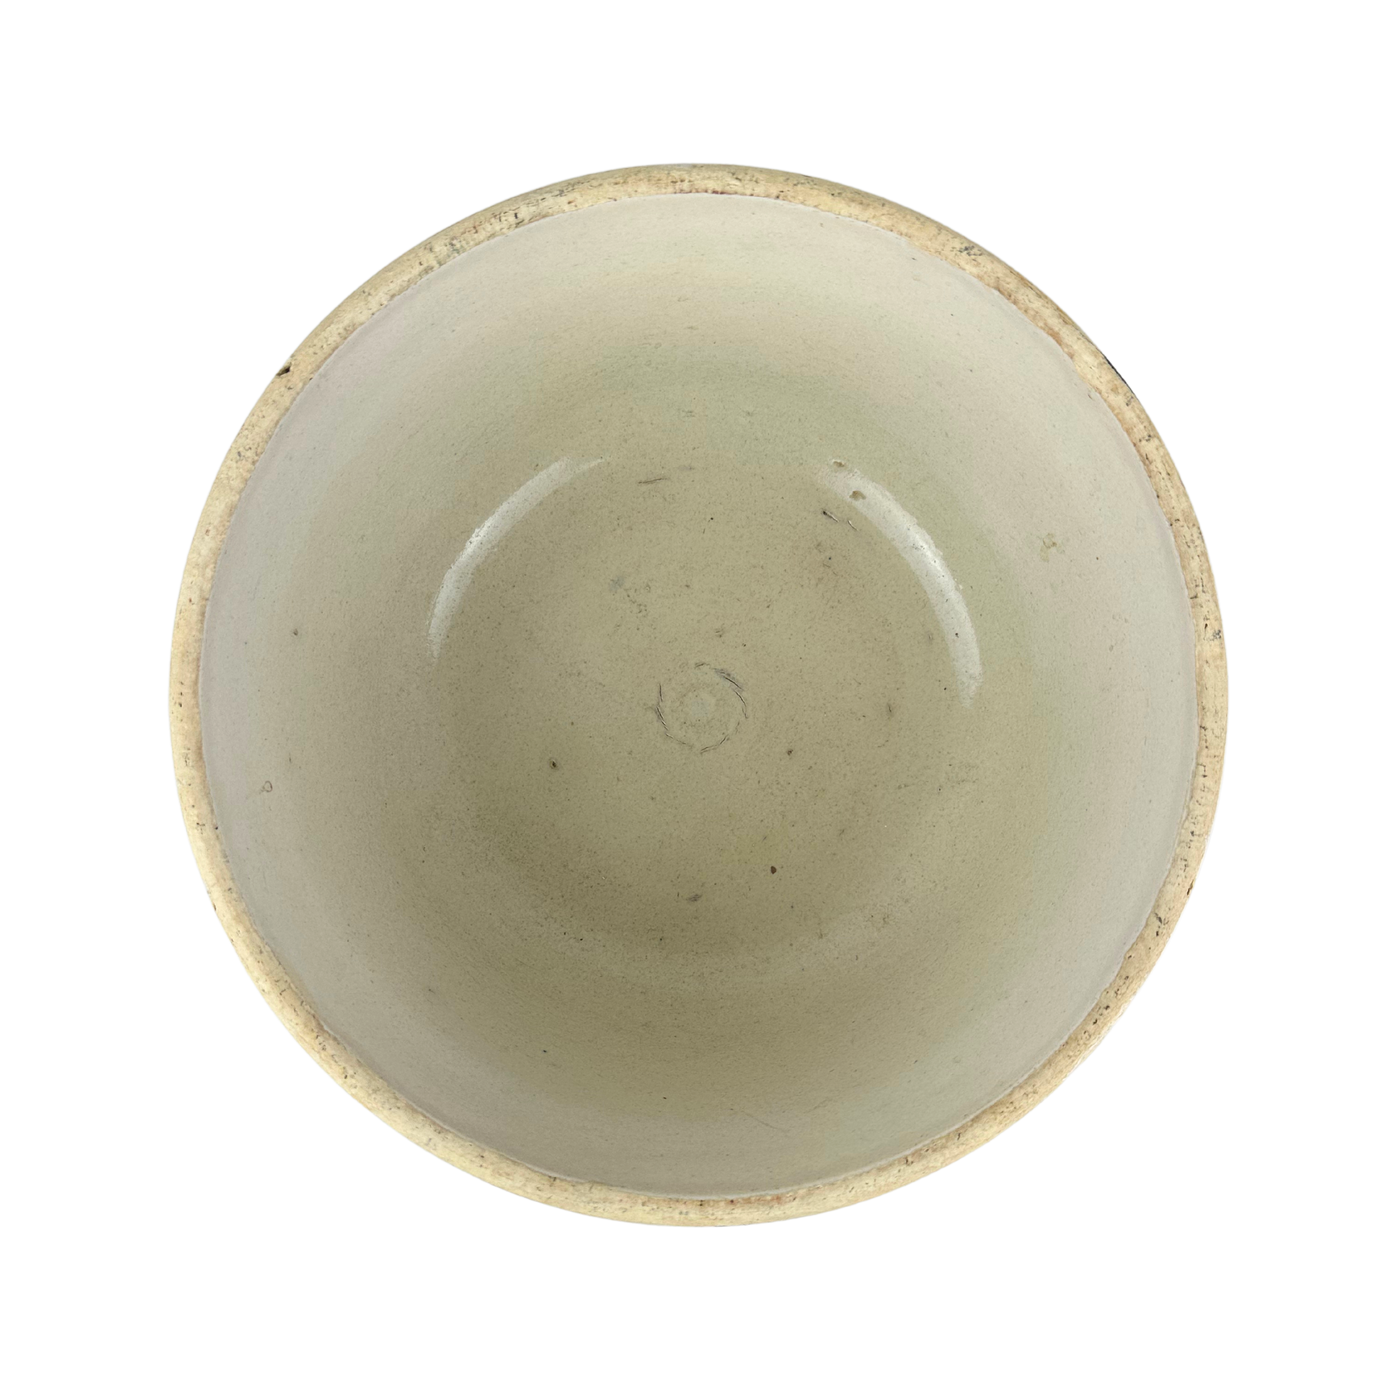 Vintage Stoneware Crock Bowl